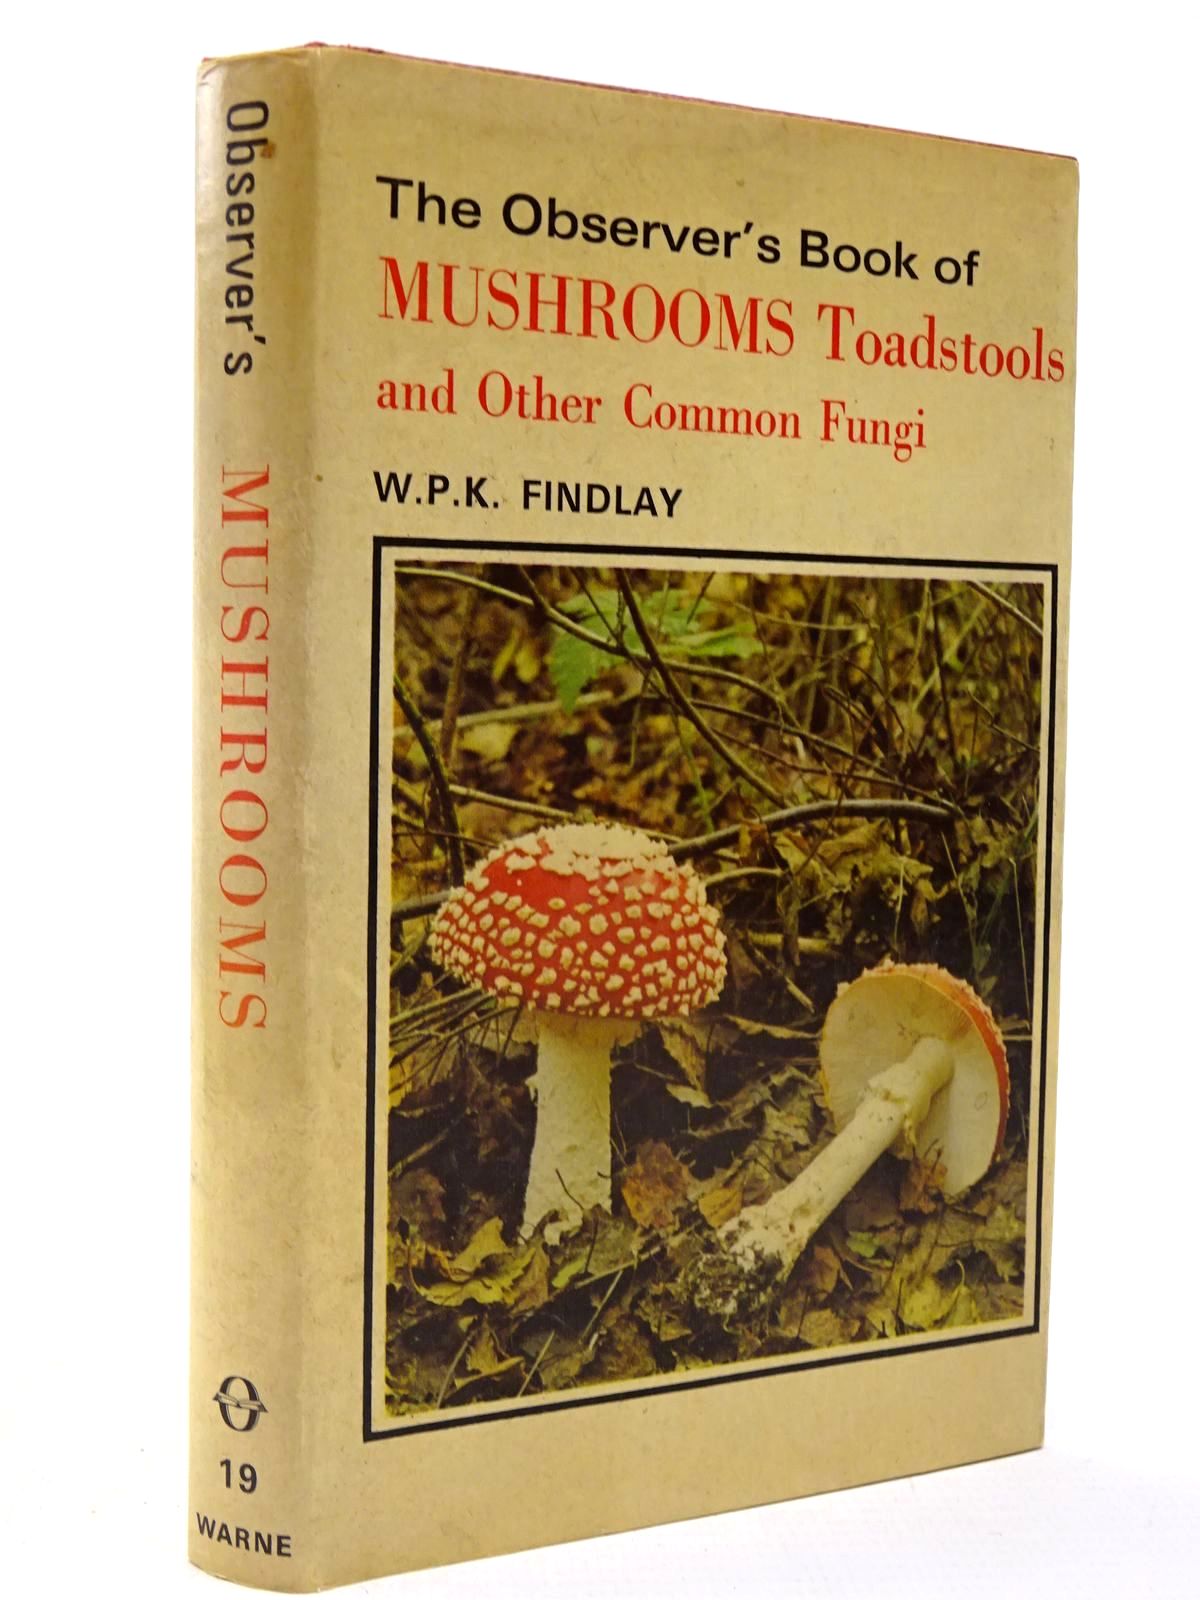 london review of books mushroom